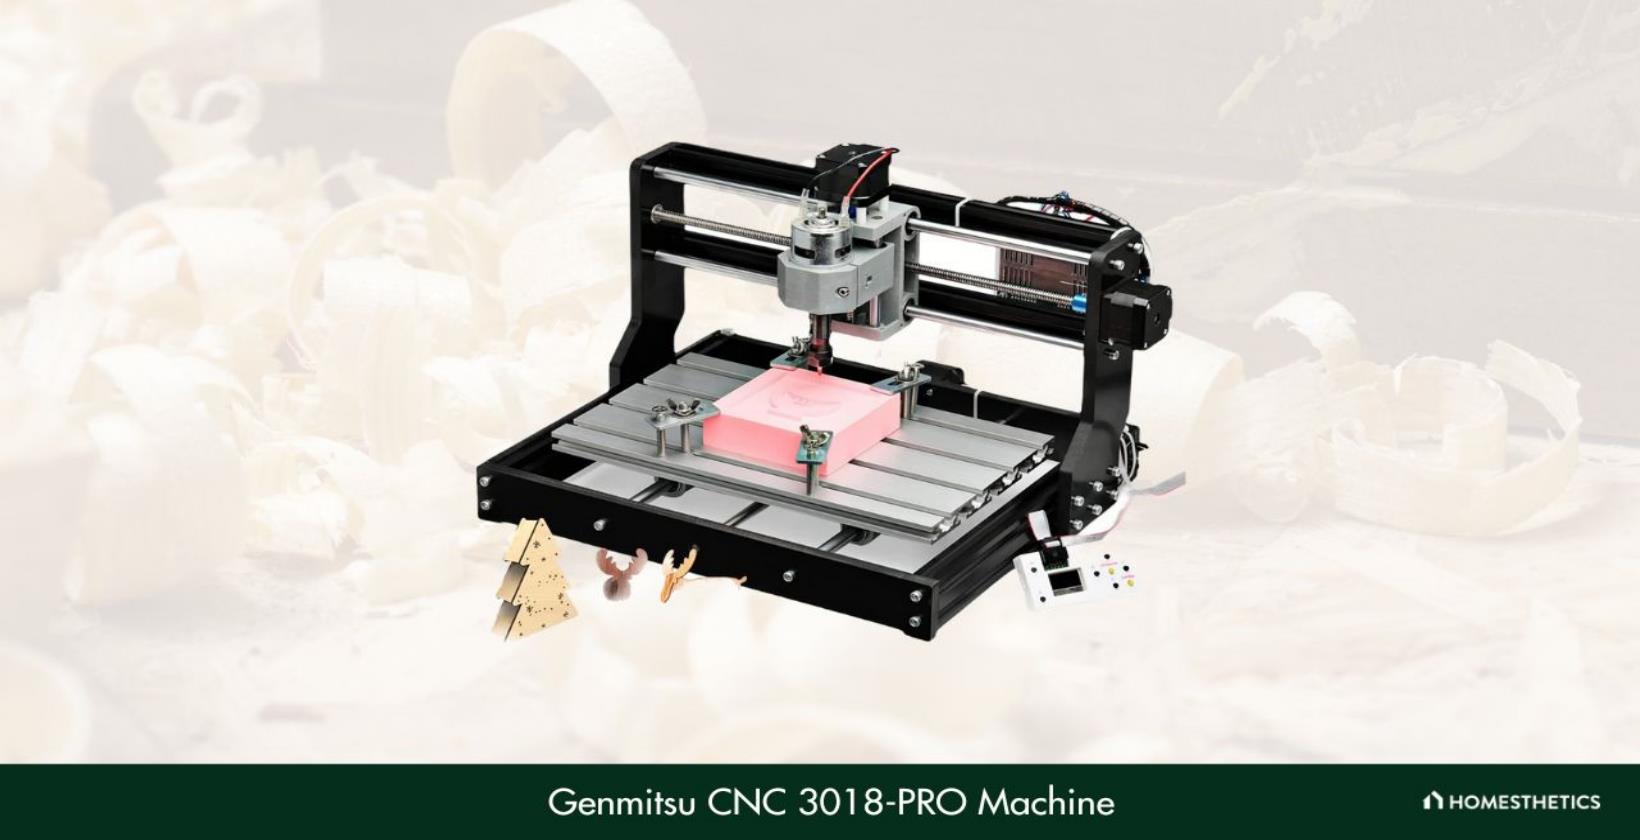 1. Genmitsu CNC 3018 PRO Machine